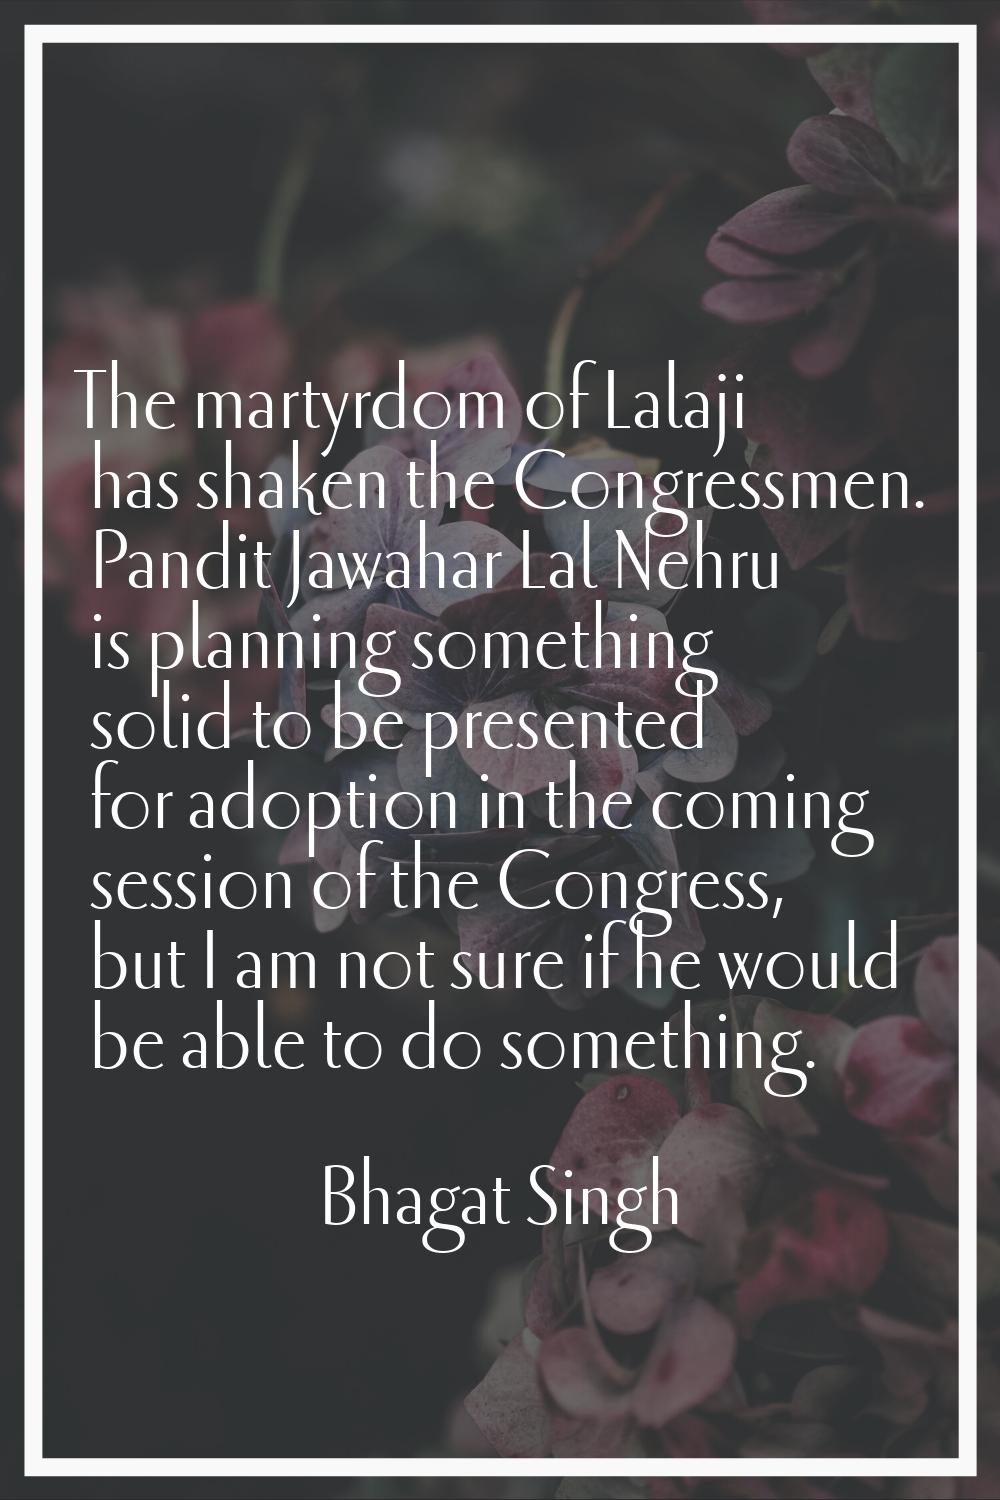 The martyrdom of Lalaji has shaken the Congressmen. Pandit Jawahar Lal Nehru is planning something 